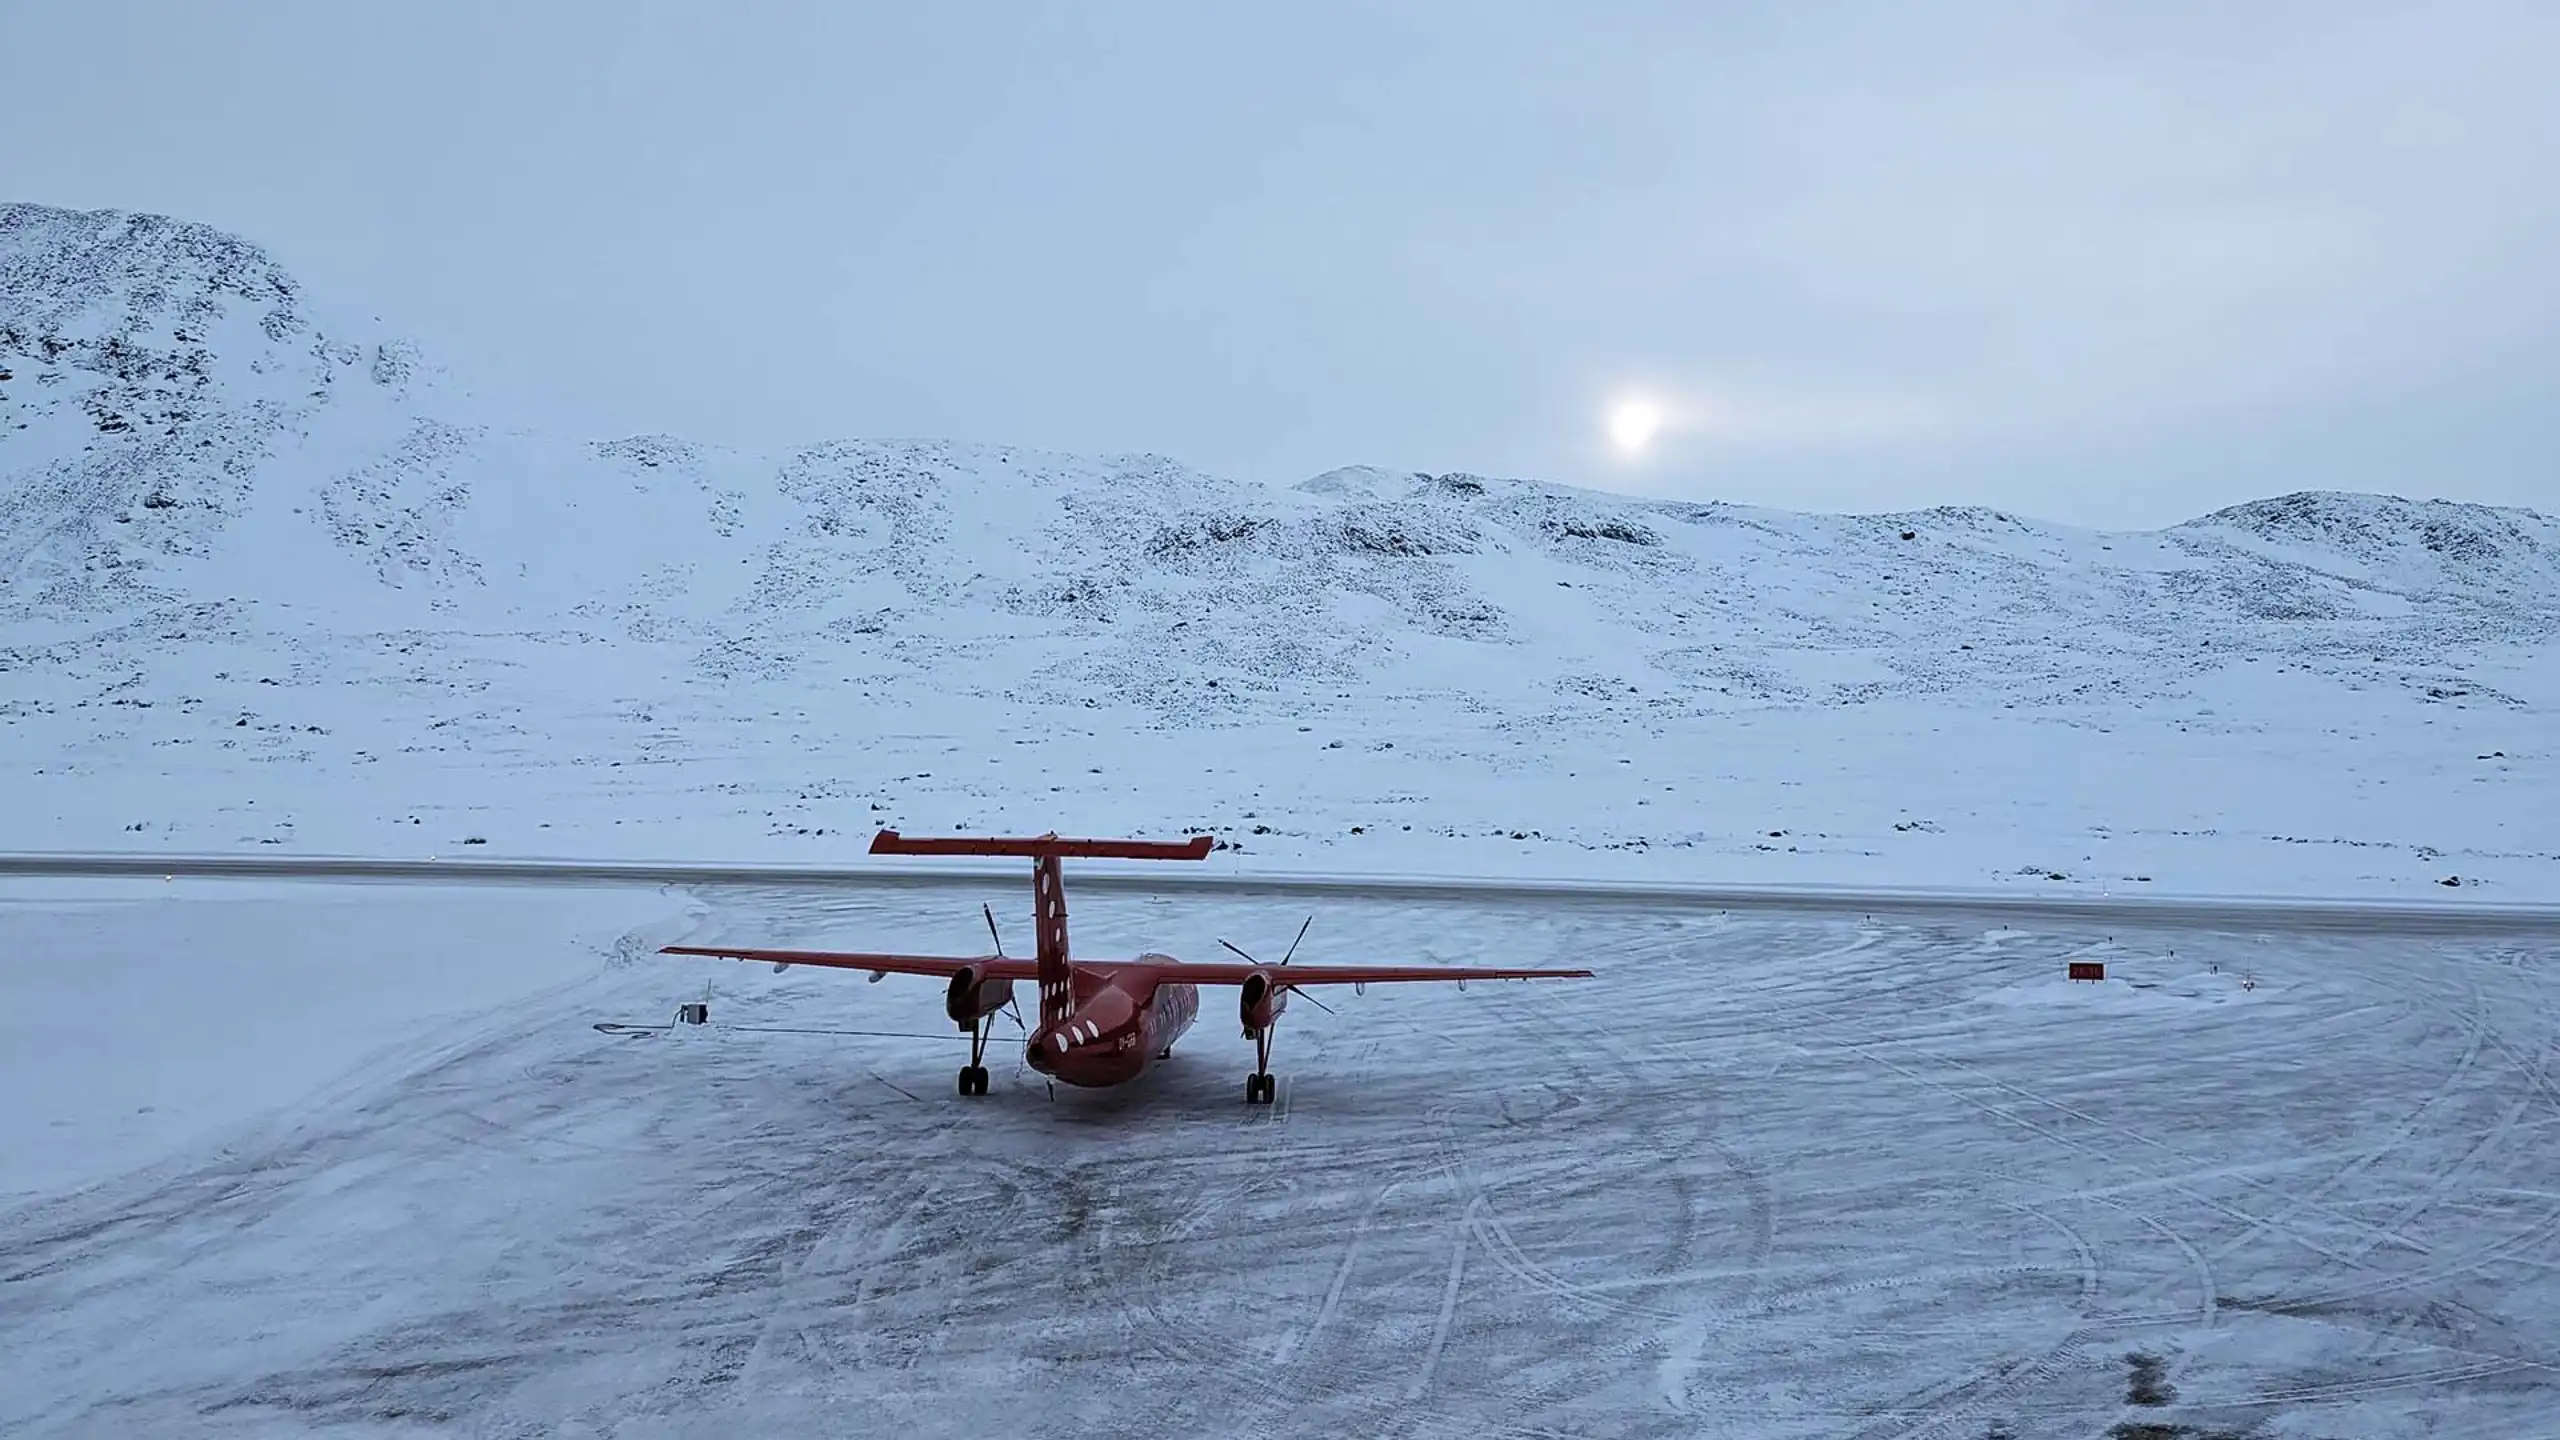 Air Greenland-ip DASH-8 GL 632 nal.  11.40 Kulusummut mippoq. Ass.: Jens Nymand, AFIS Kulusuk